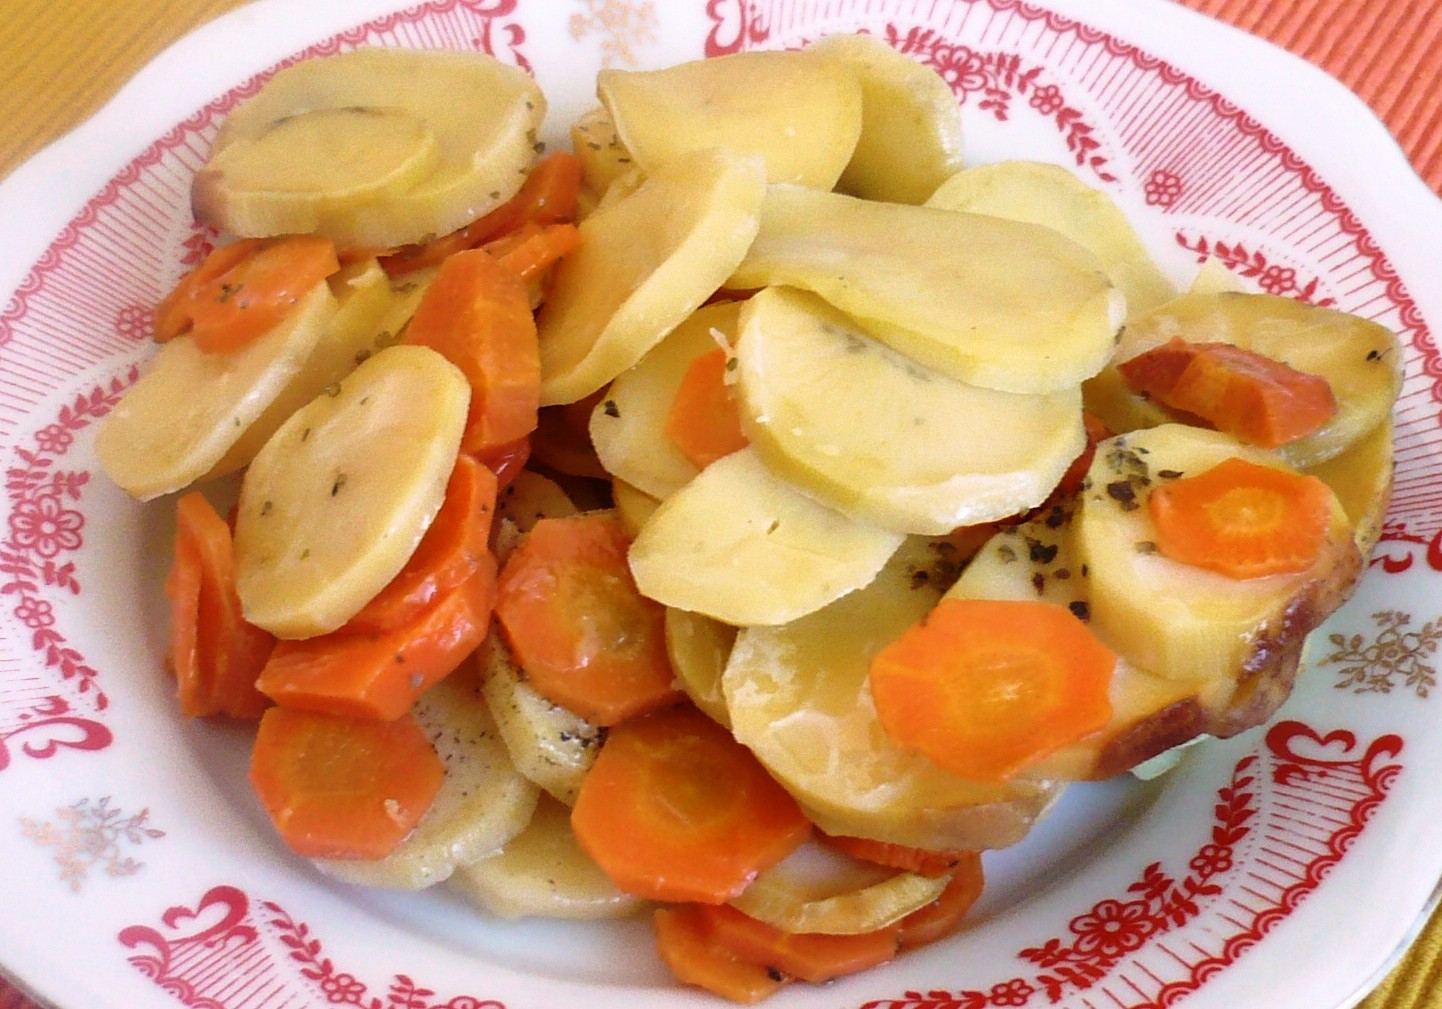 Zapečená mrkev s bramborem